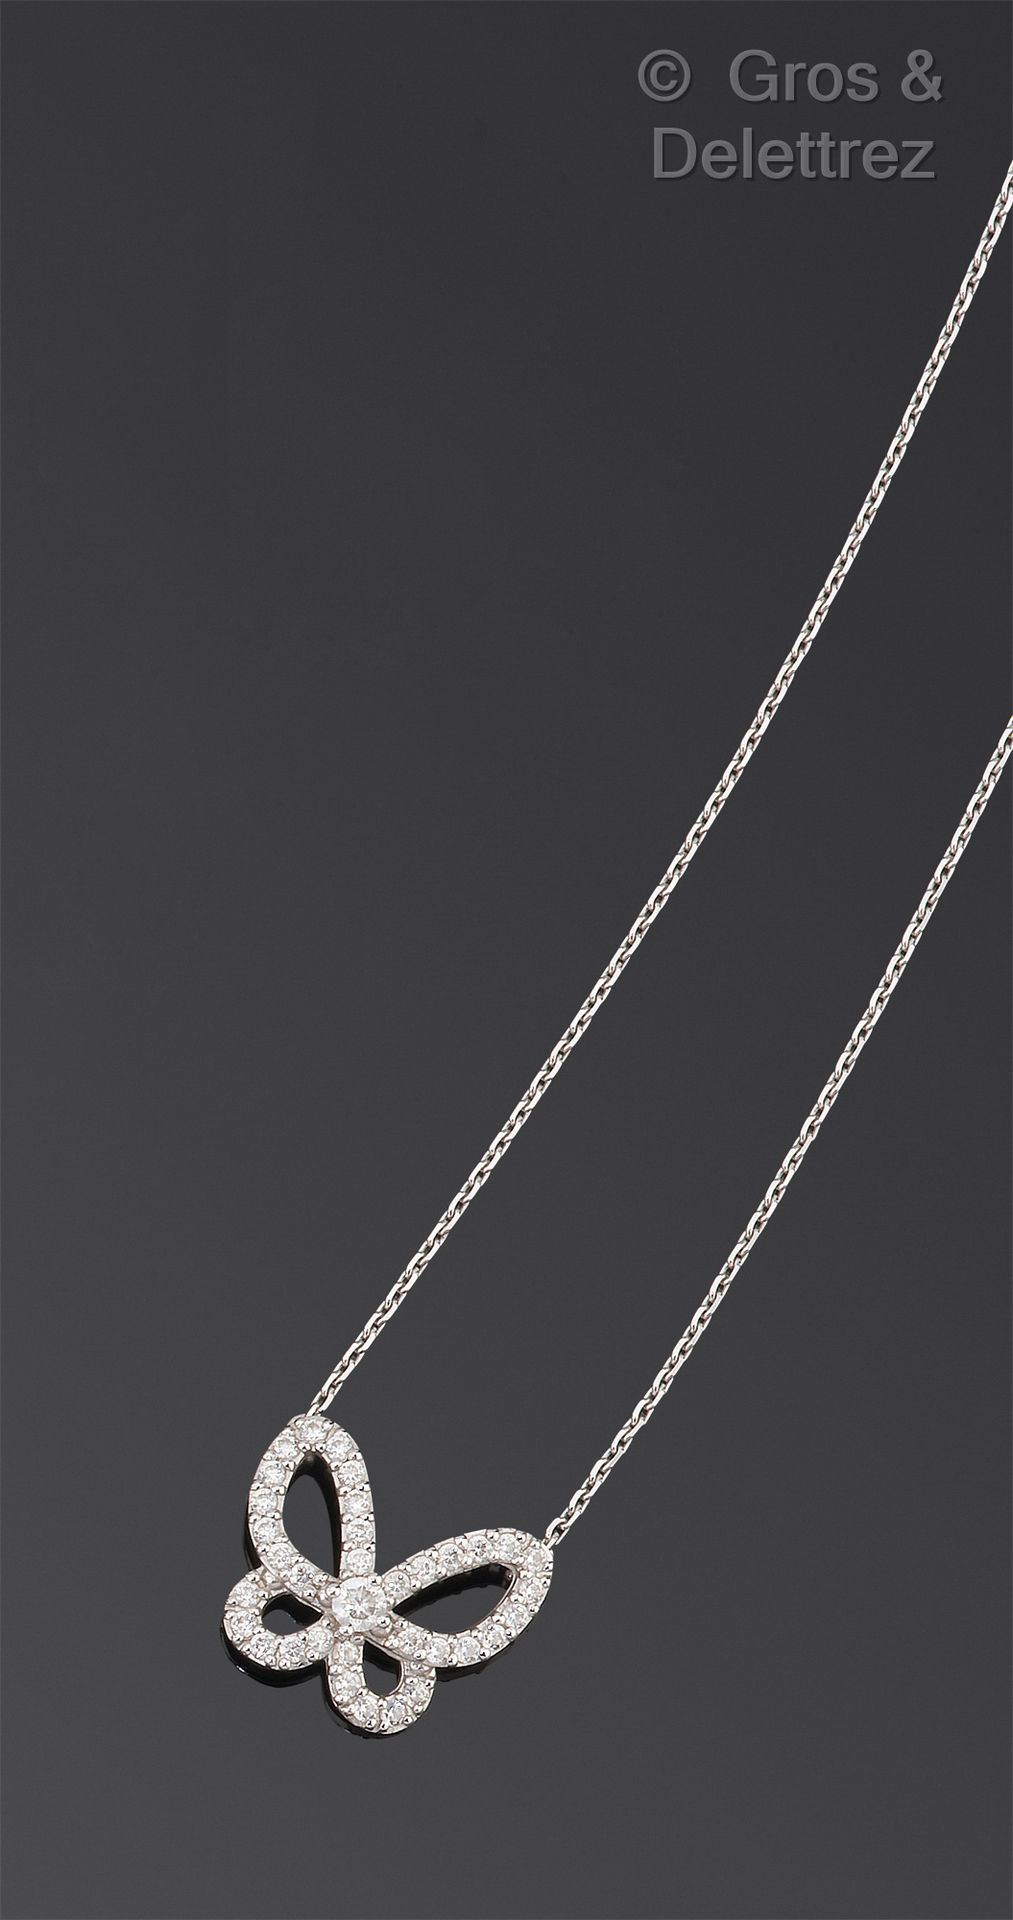 Null 蝴蝶 "白金项链，设计上镶嵌了明亮式切割的钻石，中间那颗更重要。吊坠尺寸：1.5 x 1.2厘米。毛重：2.8克。